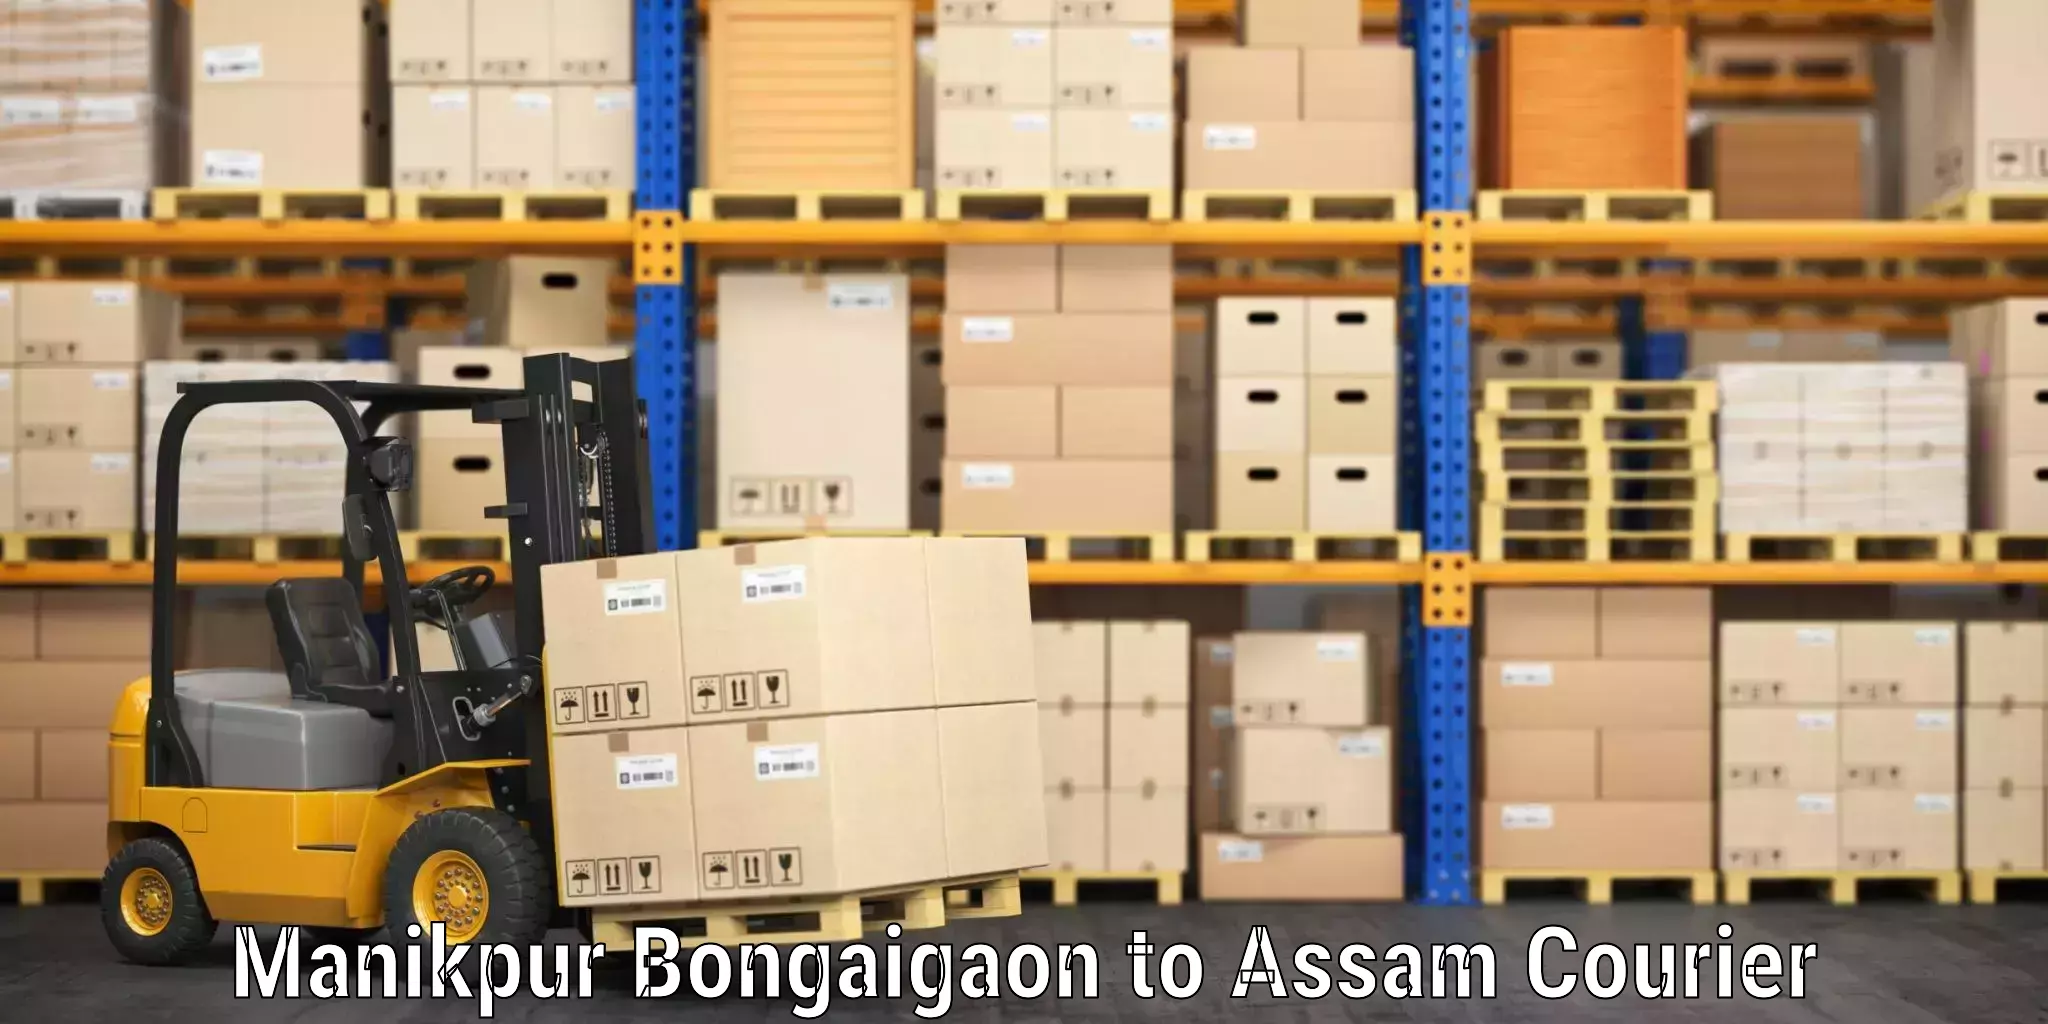 Baggage shipping advice Manikpur Bongaigaon to Moranhat